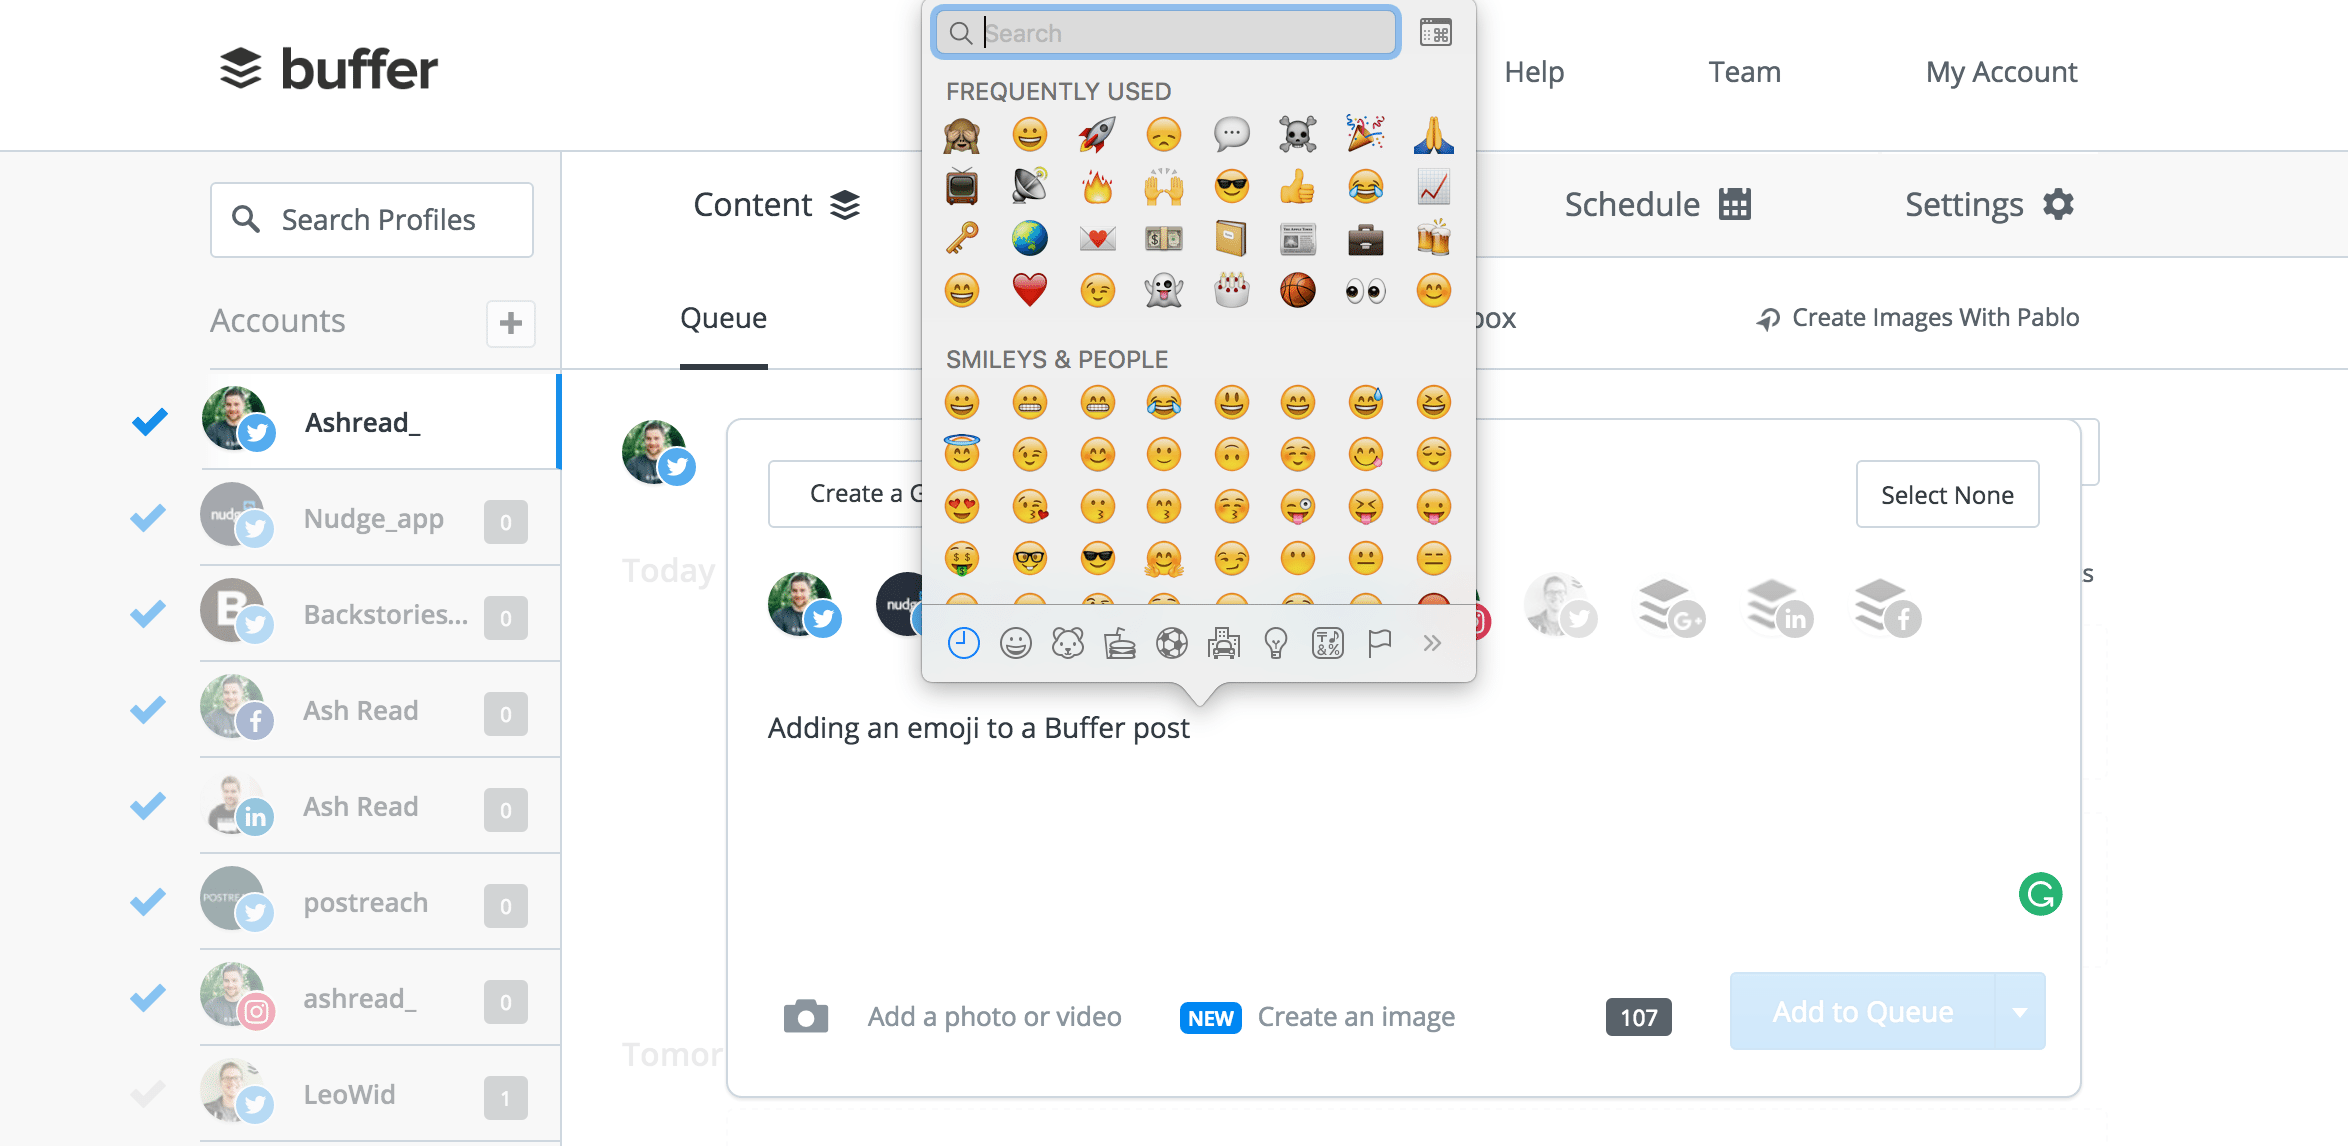 emoji keyboard for word mac